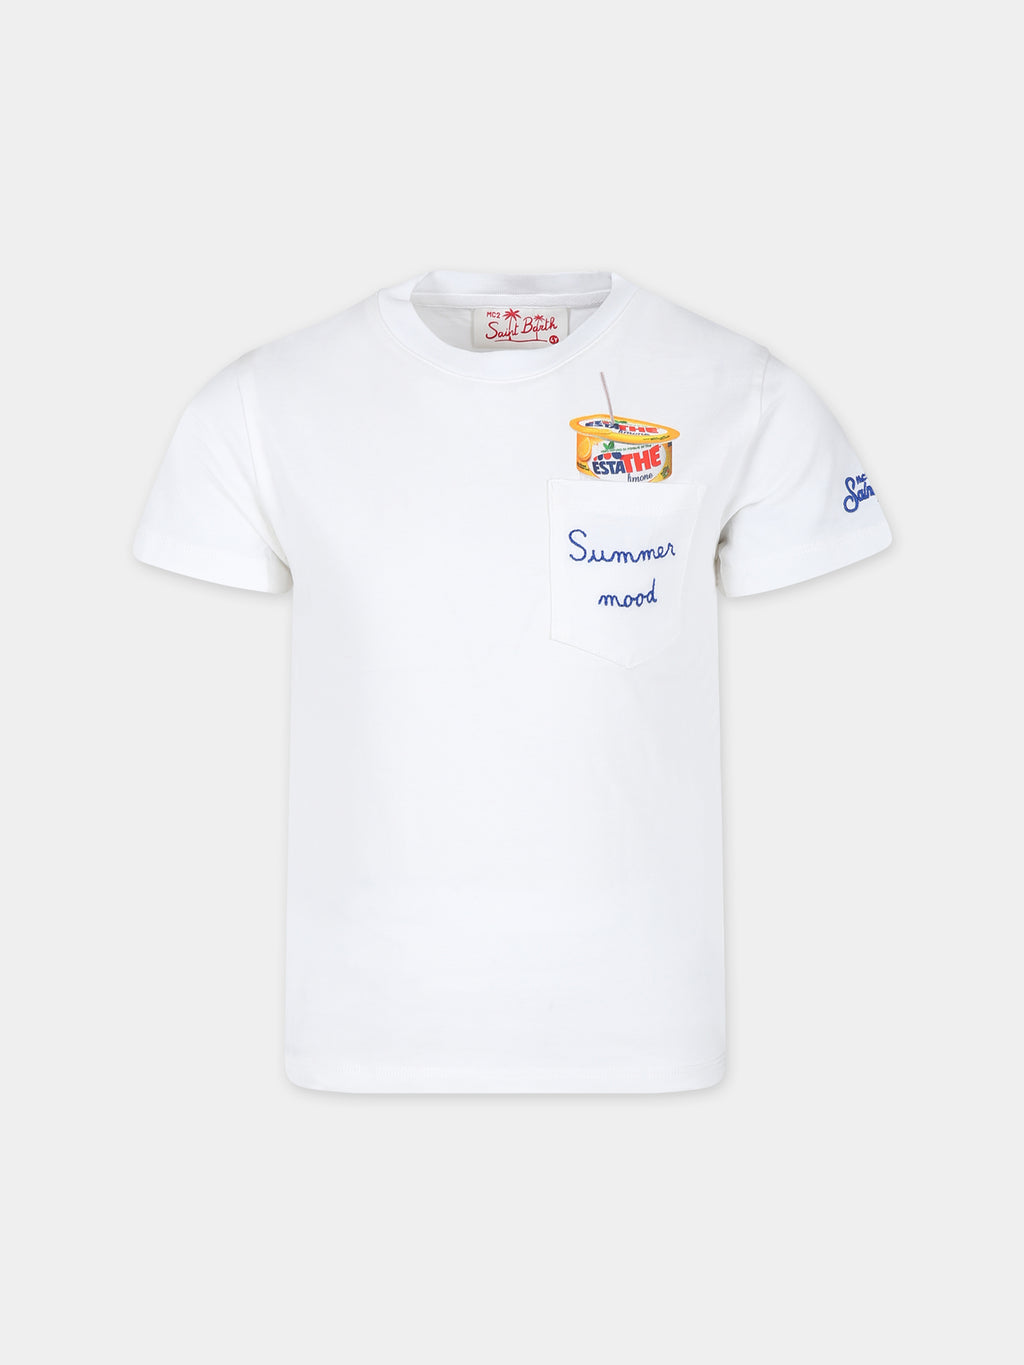 T-shirt bianca per bambino con stampa Estathé